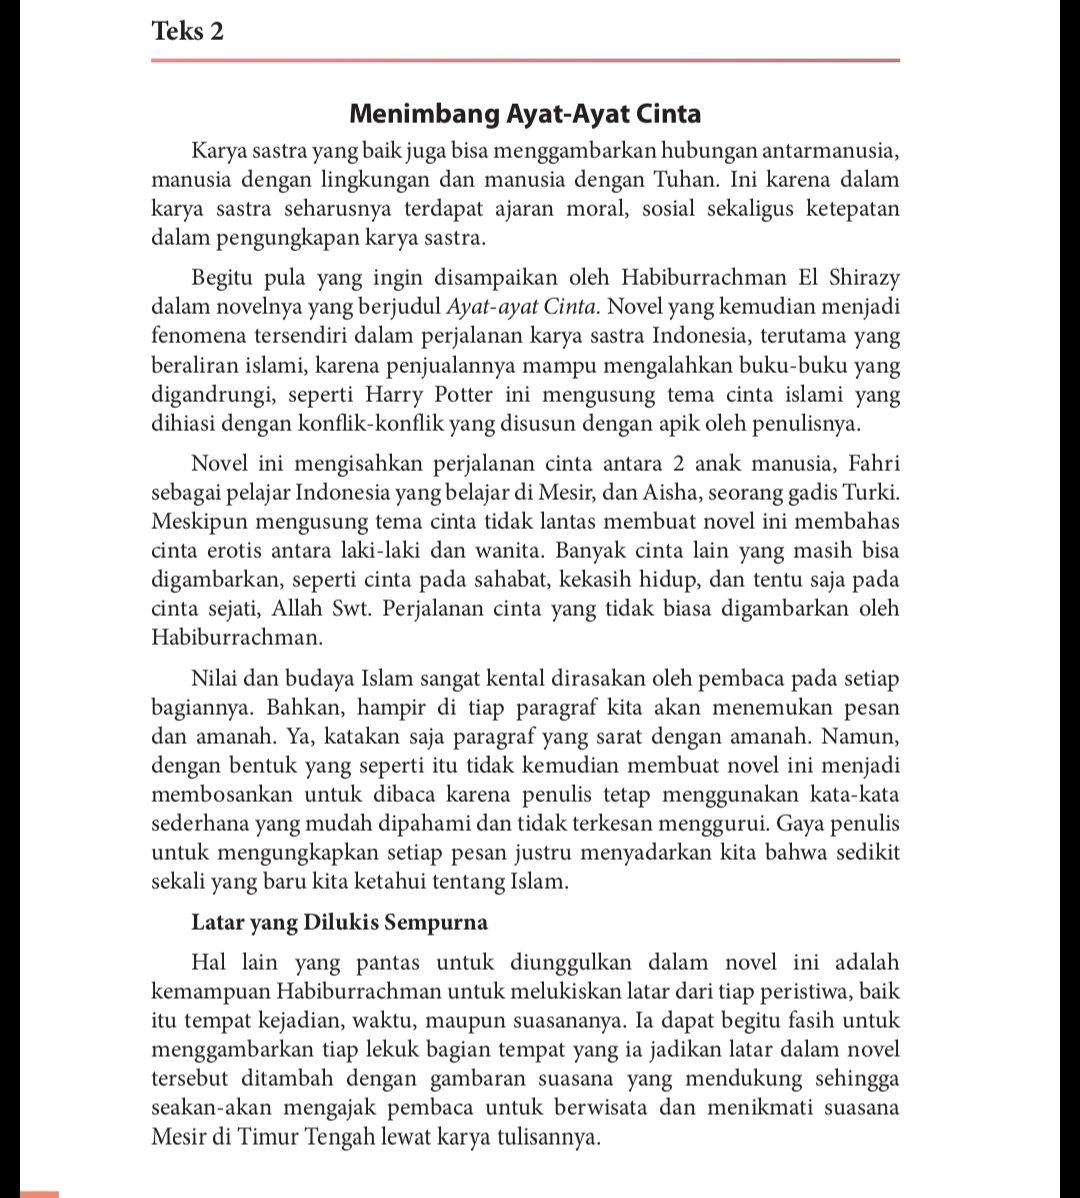 Kunci Jawaban Tugas Bahasa Indonesia Kelas 12 halaman 208, Sistematika Teks Menimbang Ayat-Ayat Cinta. *